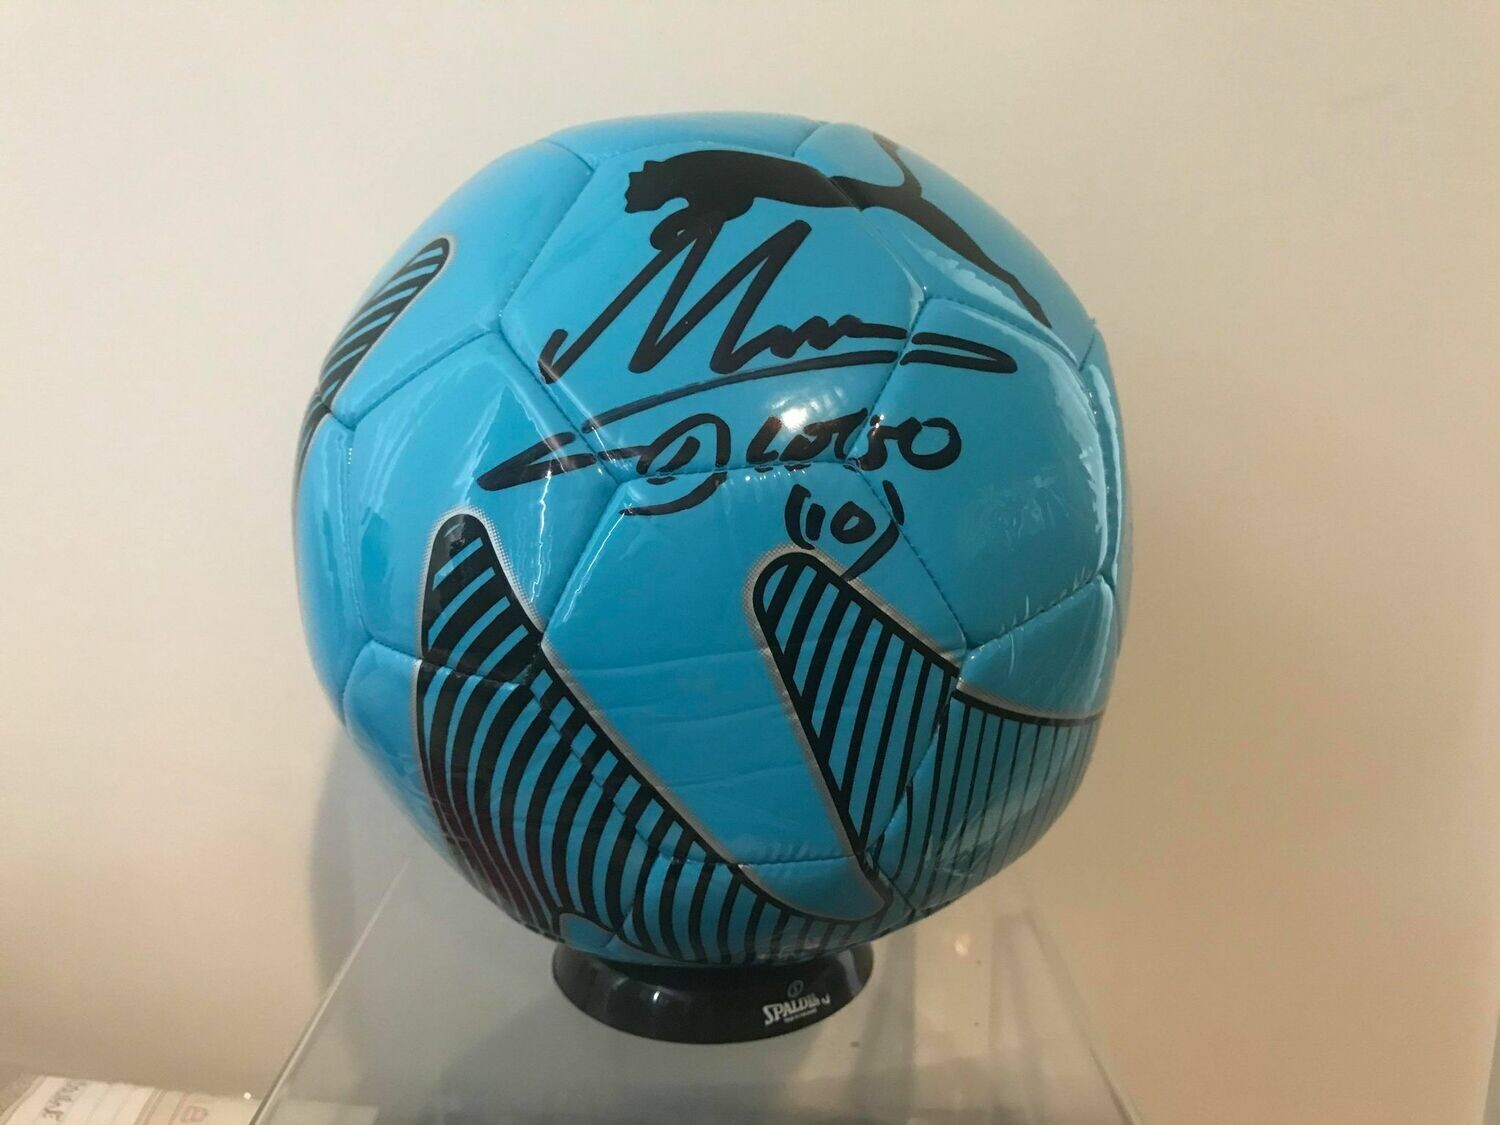 Pallone Autografato Diego Armando Maradona Signed Diego Pibe D Oro Maradona Ball Signed with COA certificate of authenticity